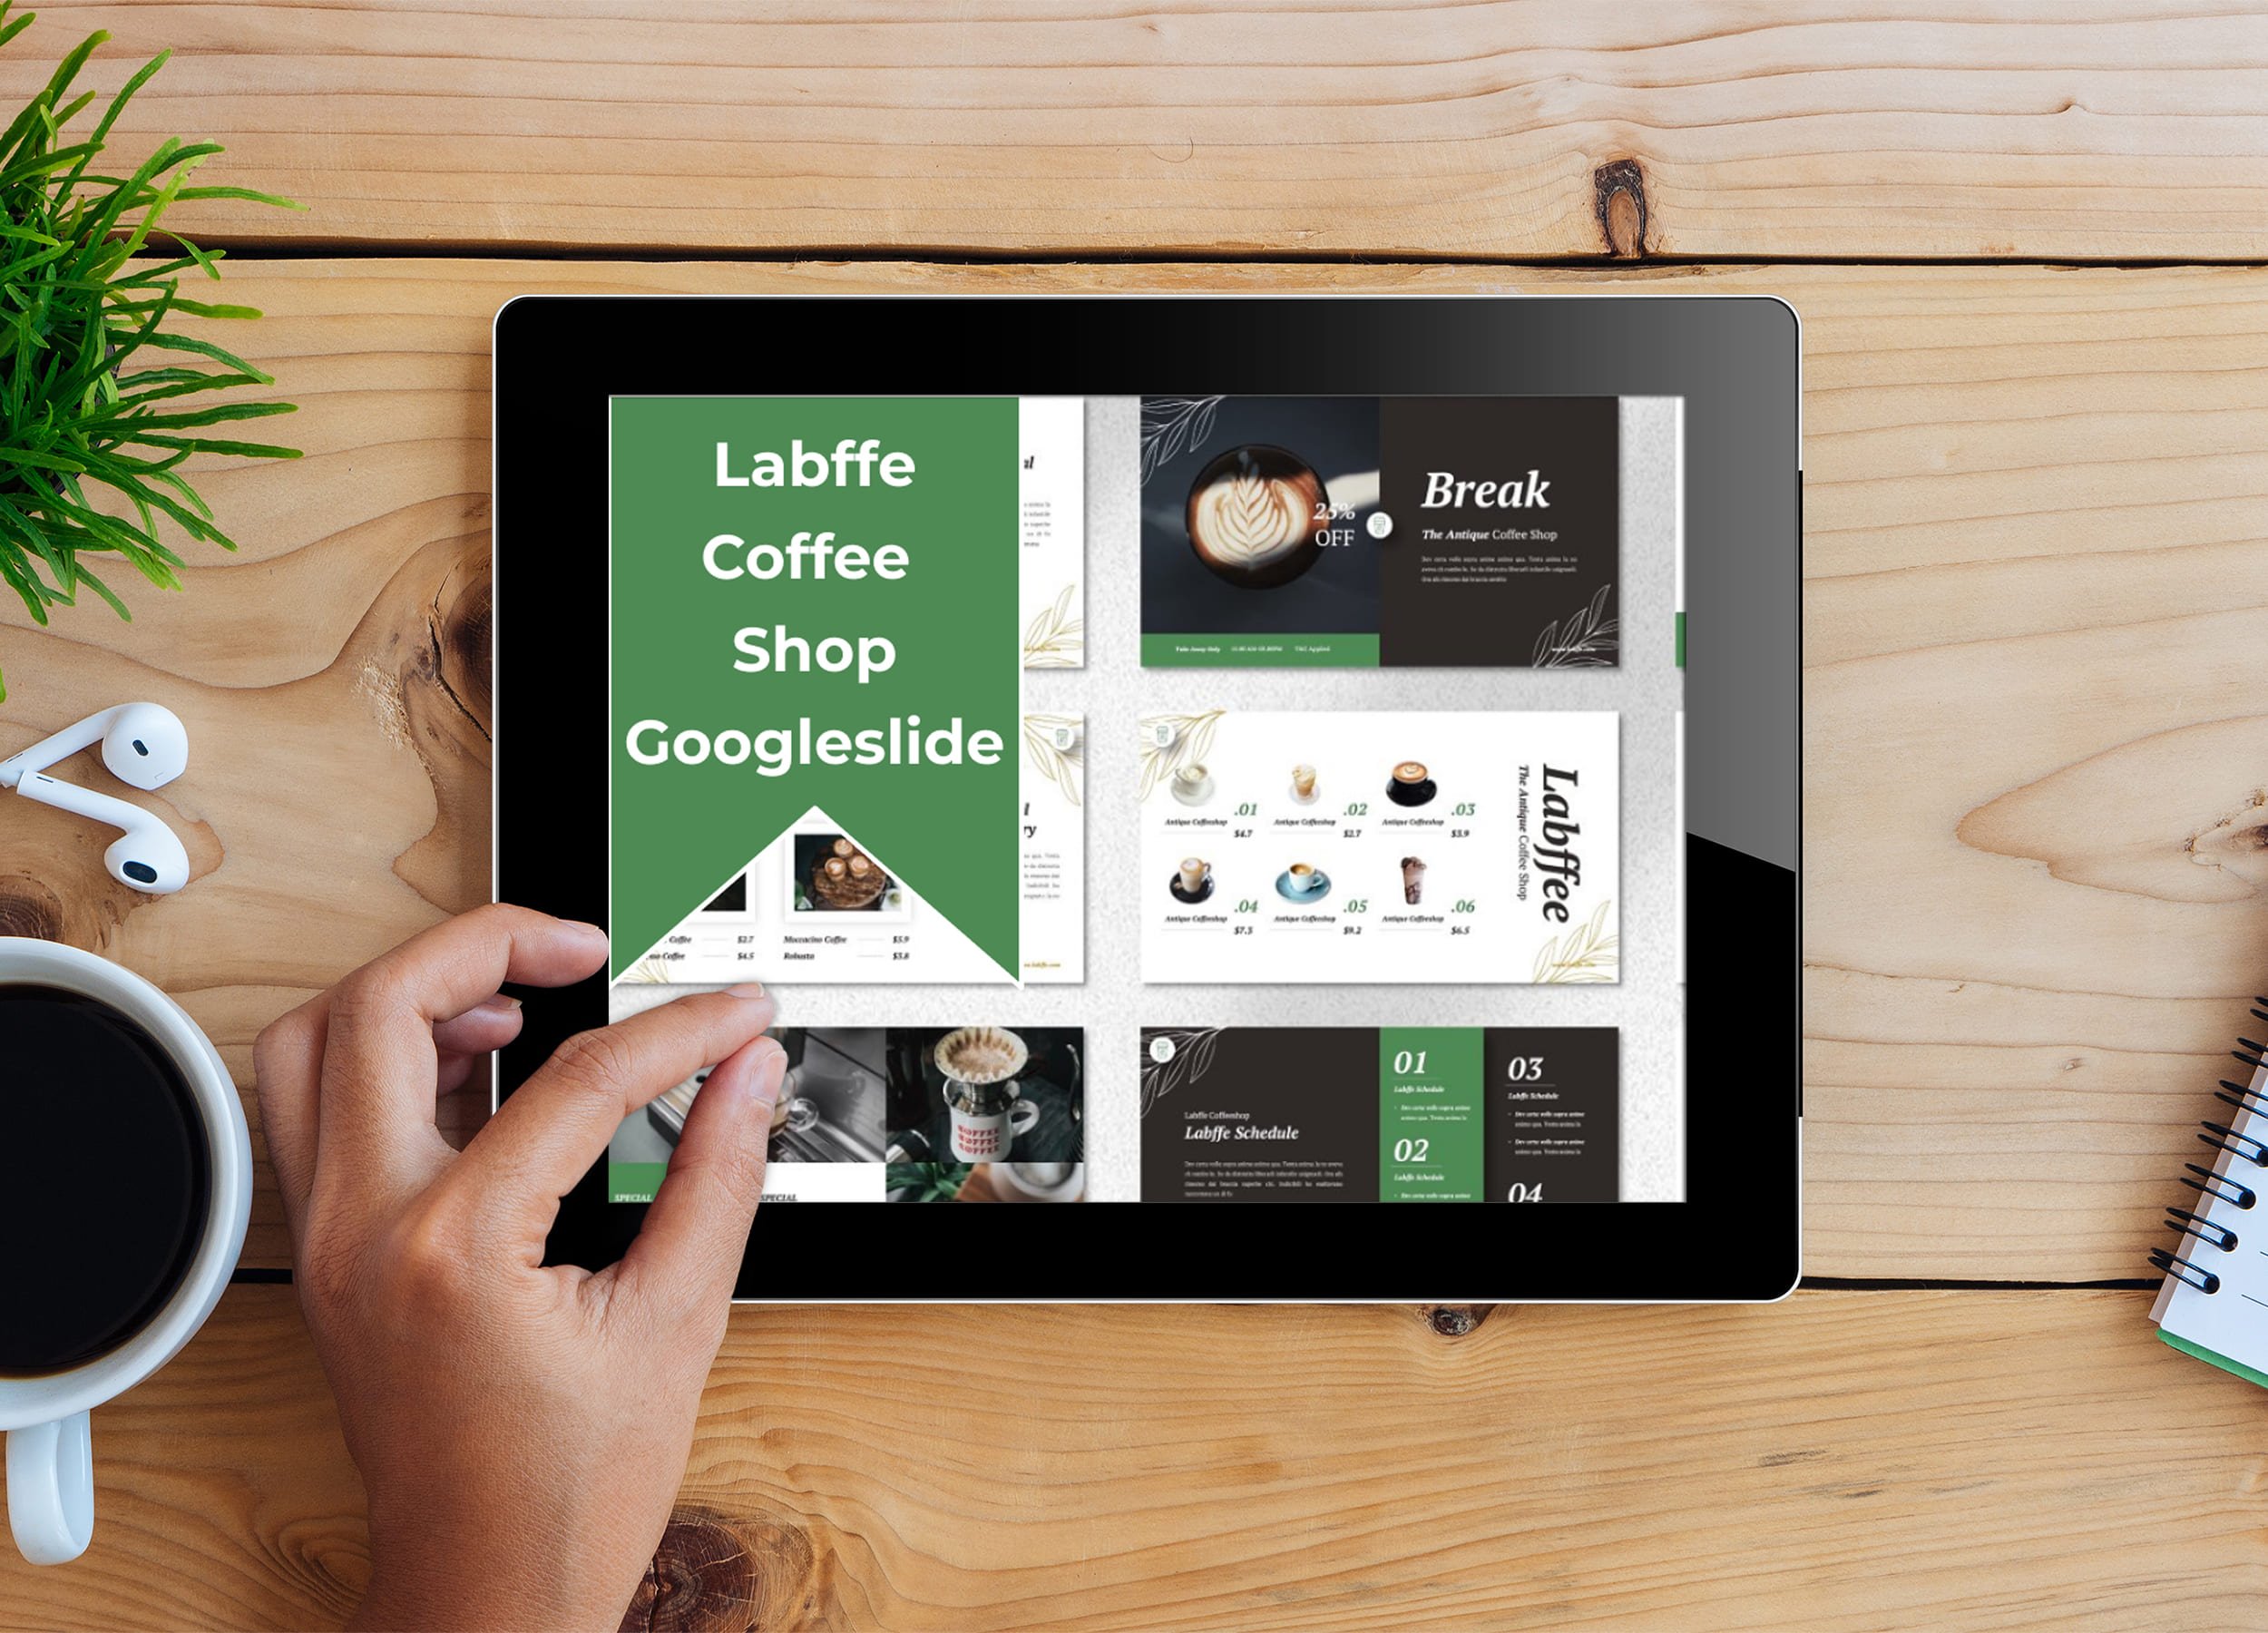 Tablet option of the Labffe - Coffee Shop Googleslide.